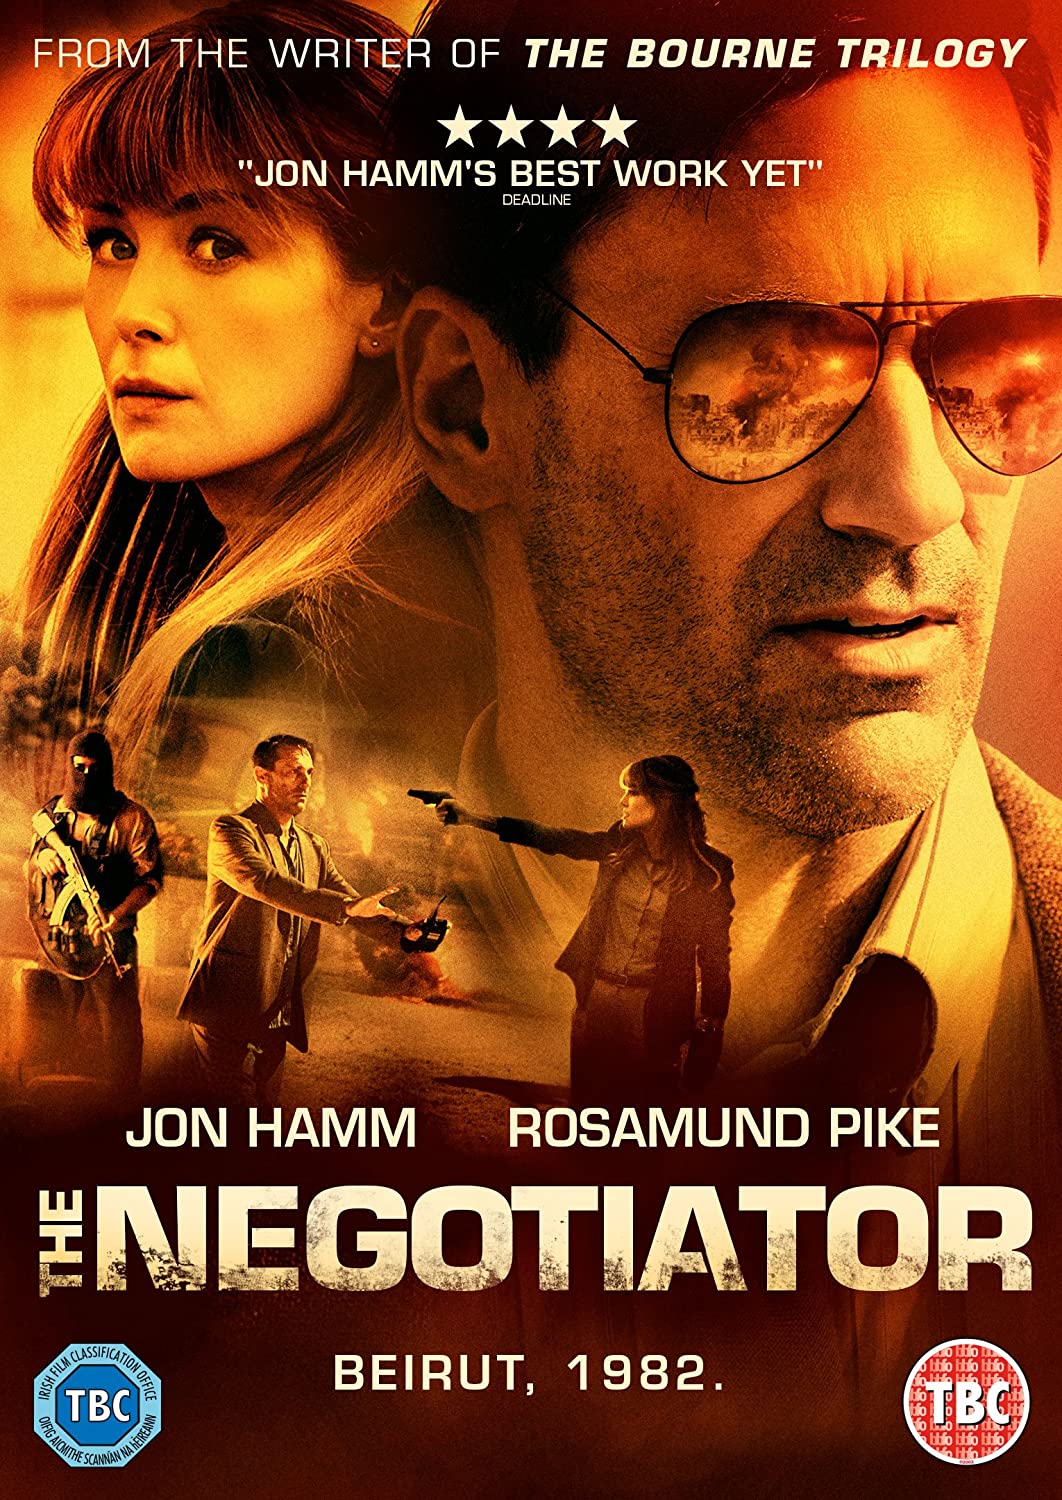 The Negotiator - Crime/Action [DVD]